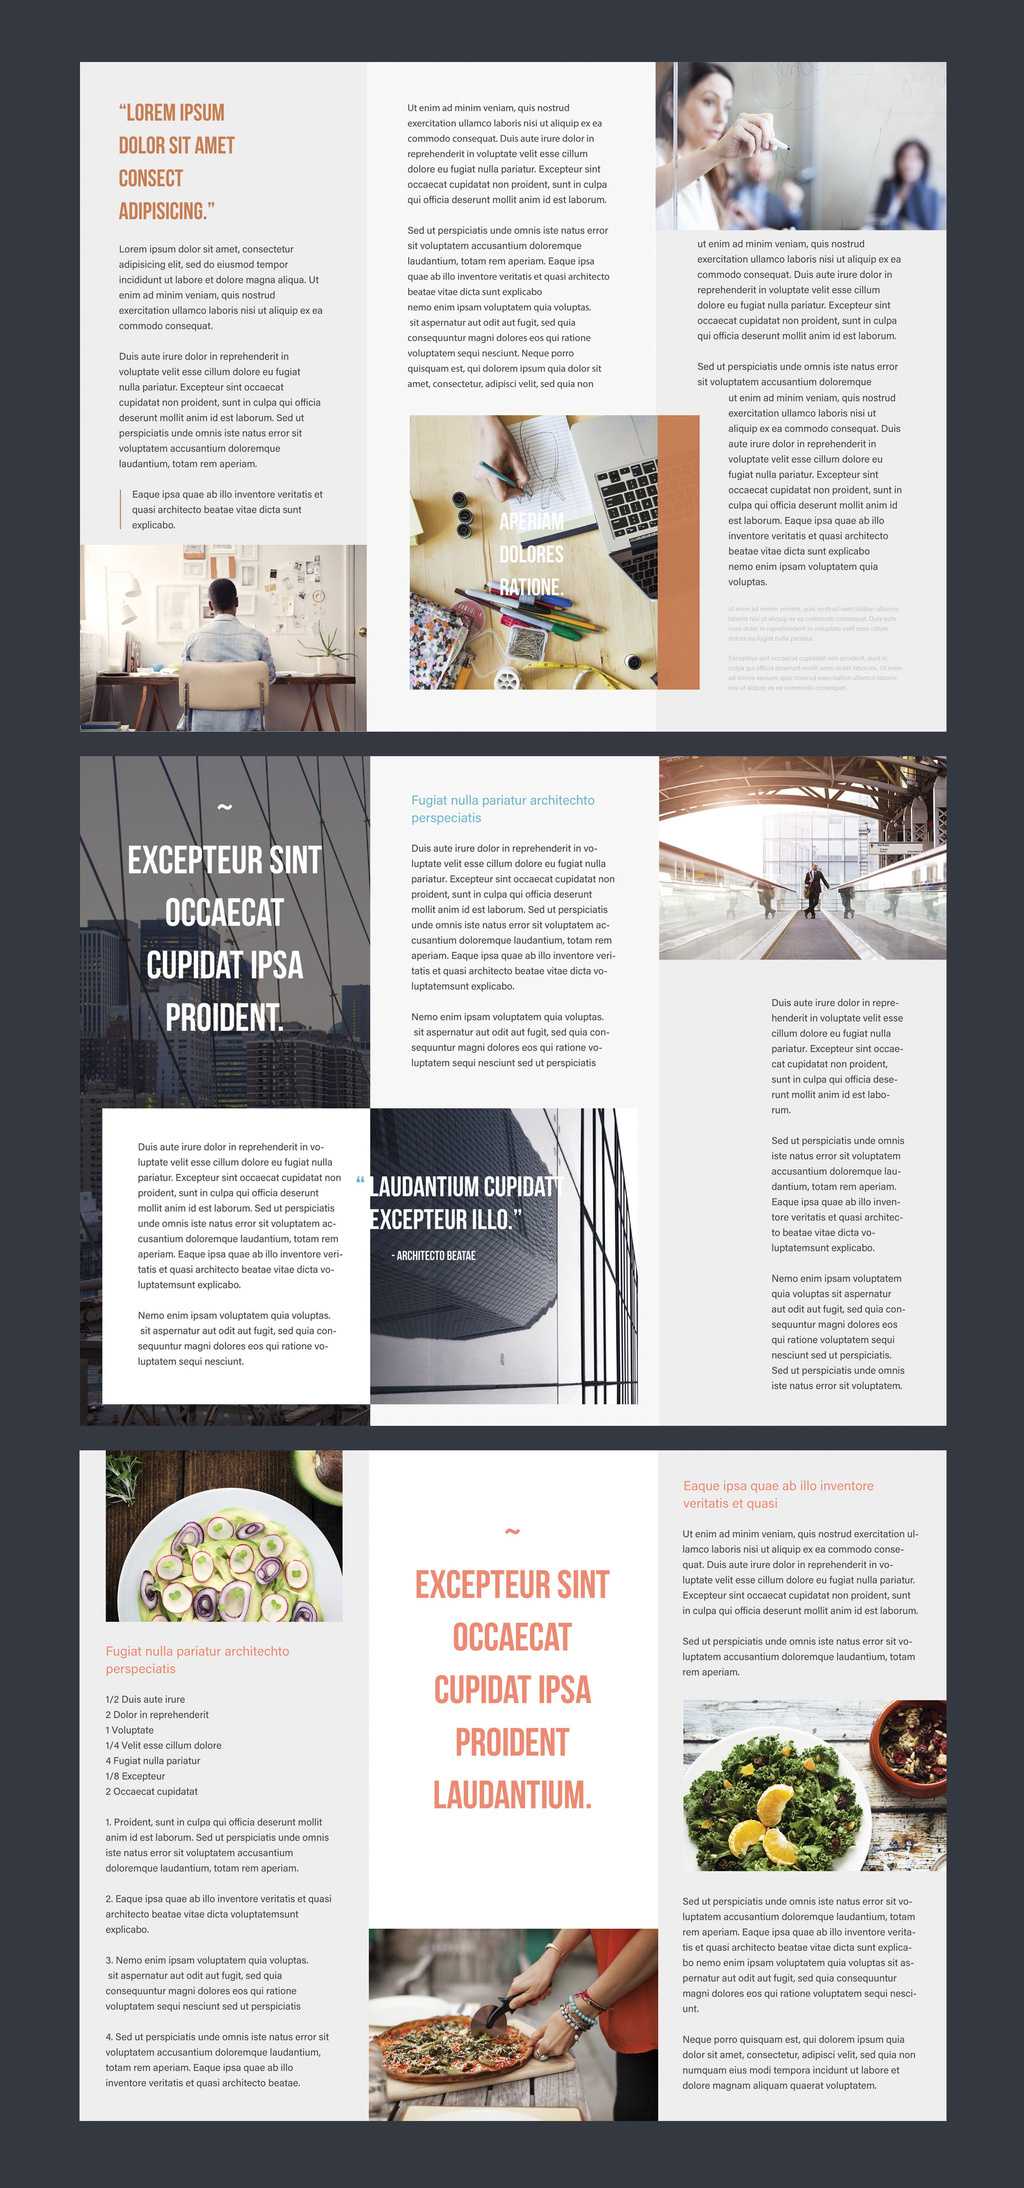 Professional Brochure Templates | Adobe Blog With Regard To Adobe Illustrator Brochure Templates Free Download